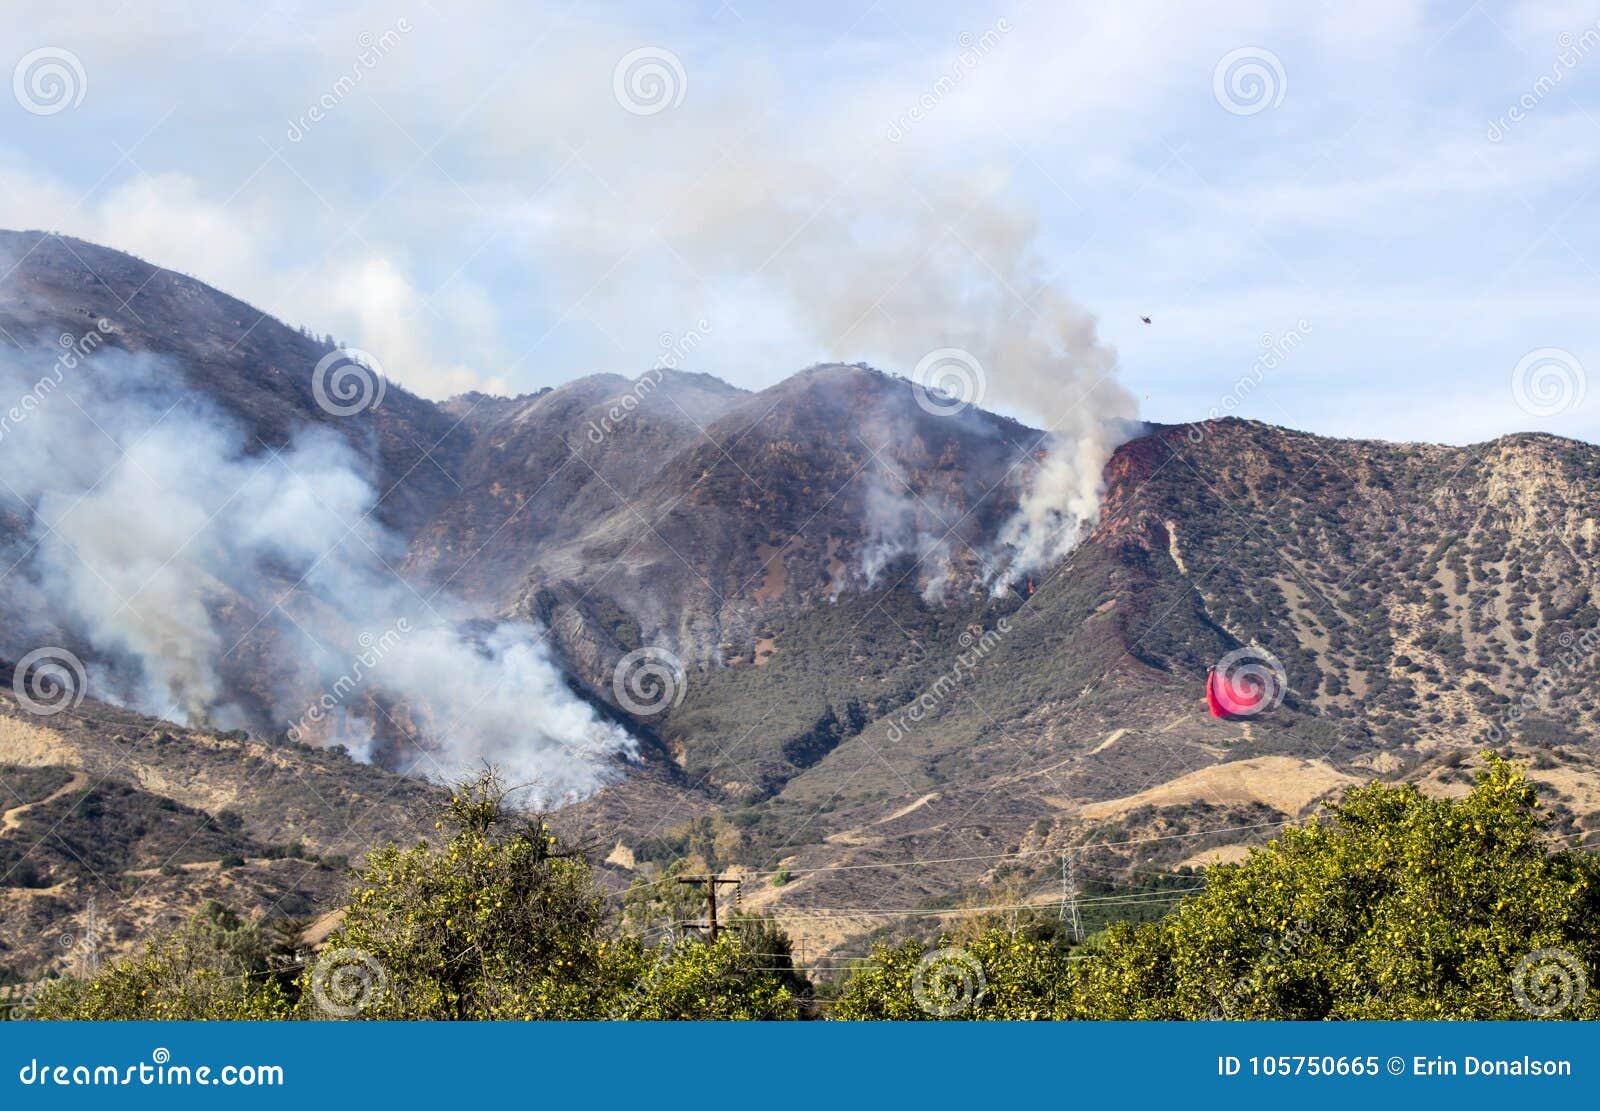 wildfire burns above carpinteria california